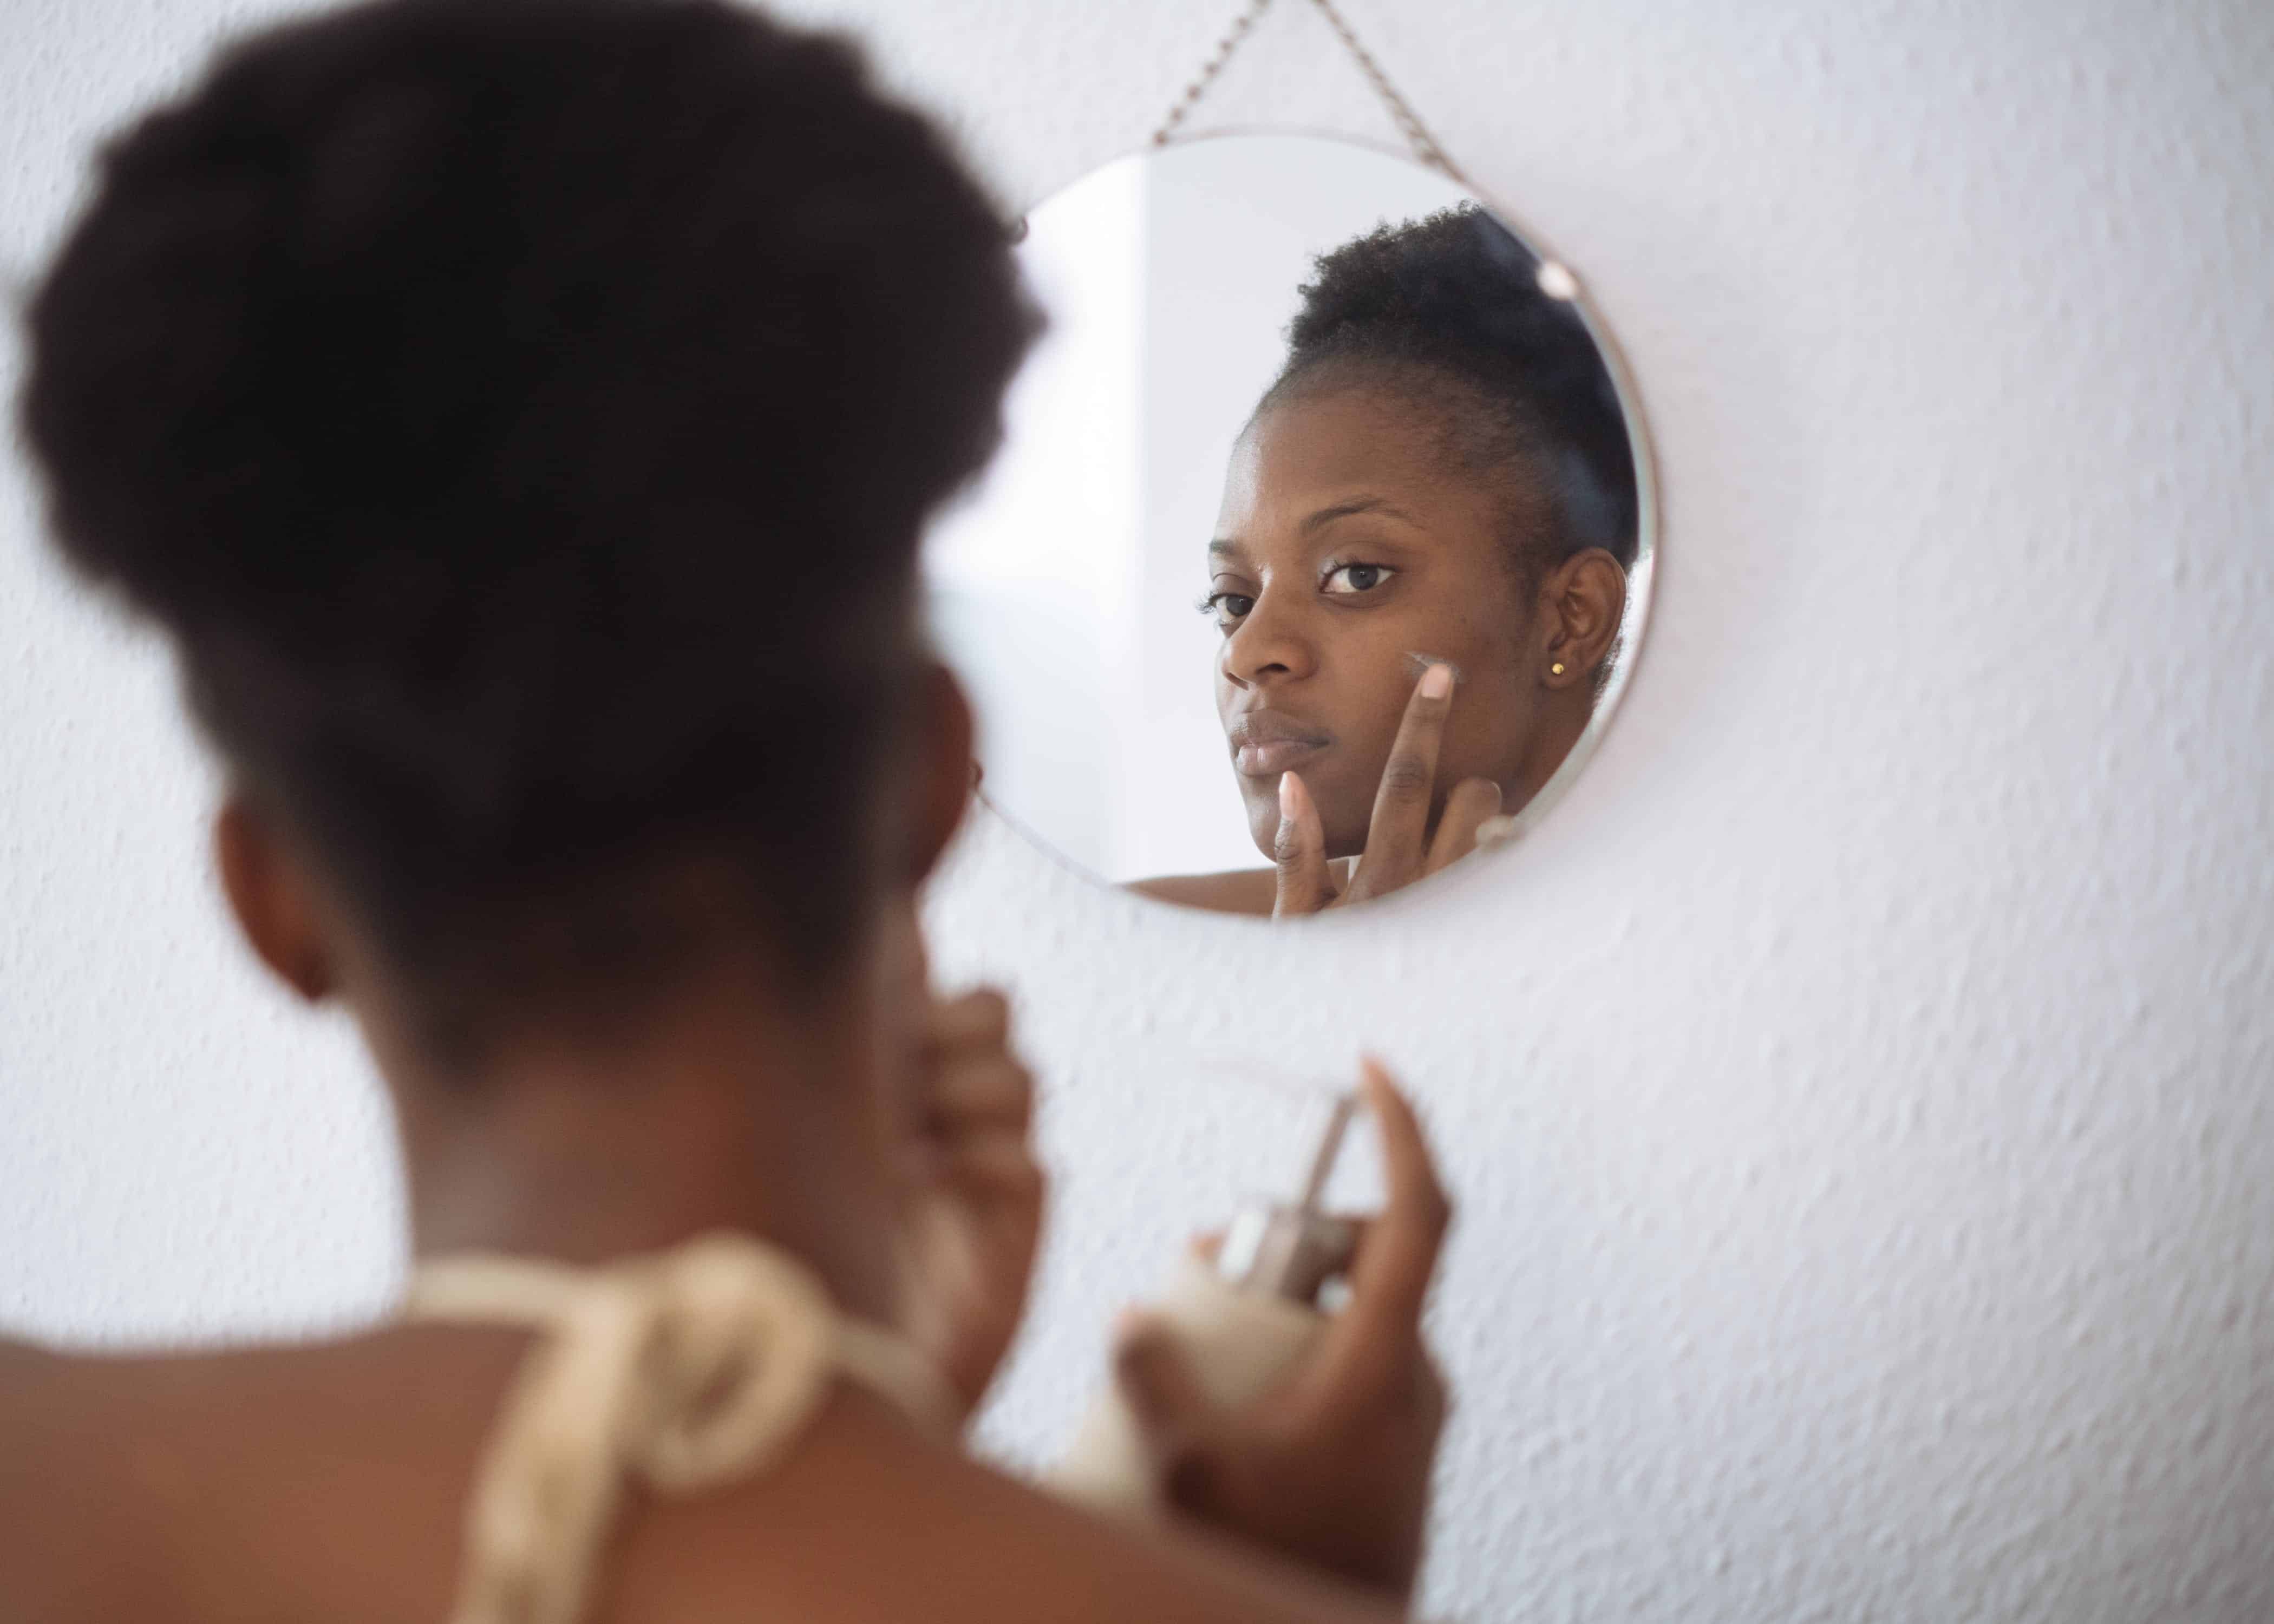 Focused woman applying cream on face in bathroom